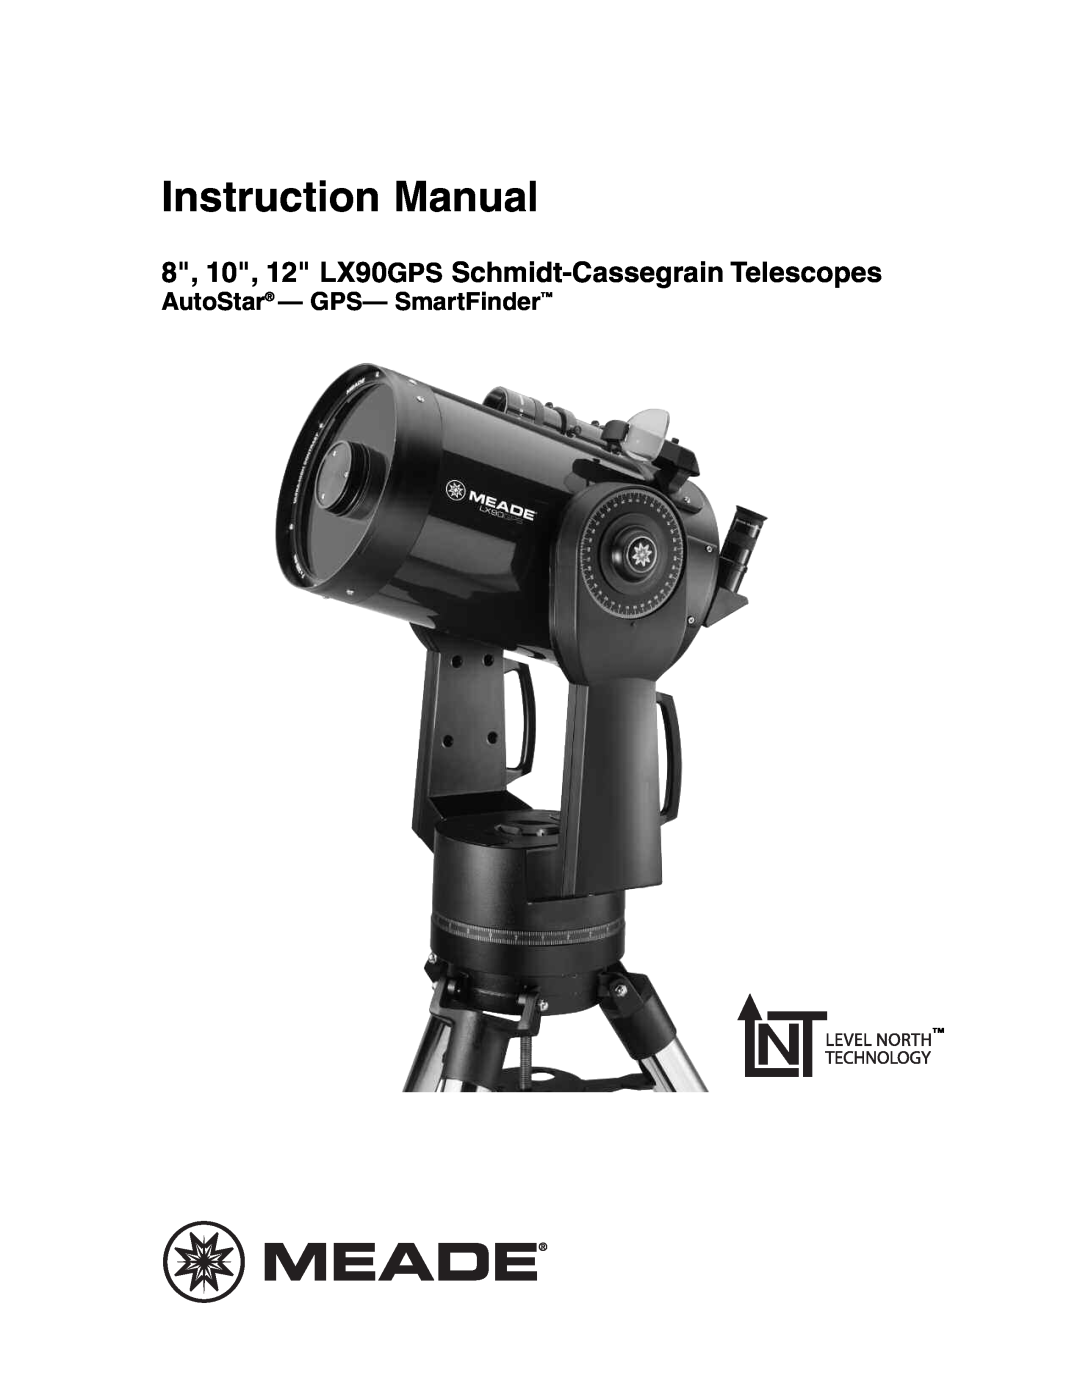 Meade instruction manual 8, 10, 12 LX90GPS Schmidt-CassegrainTelescopes, AutoStar — GPS— SmartFinder 